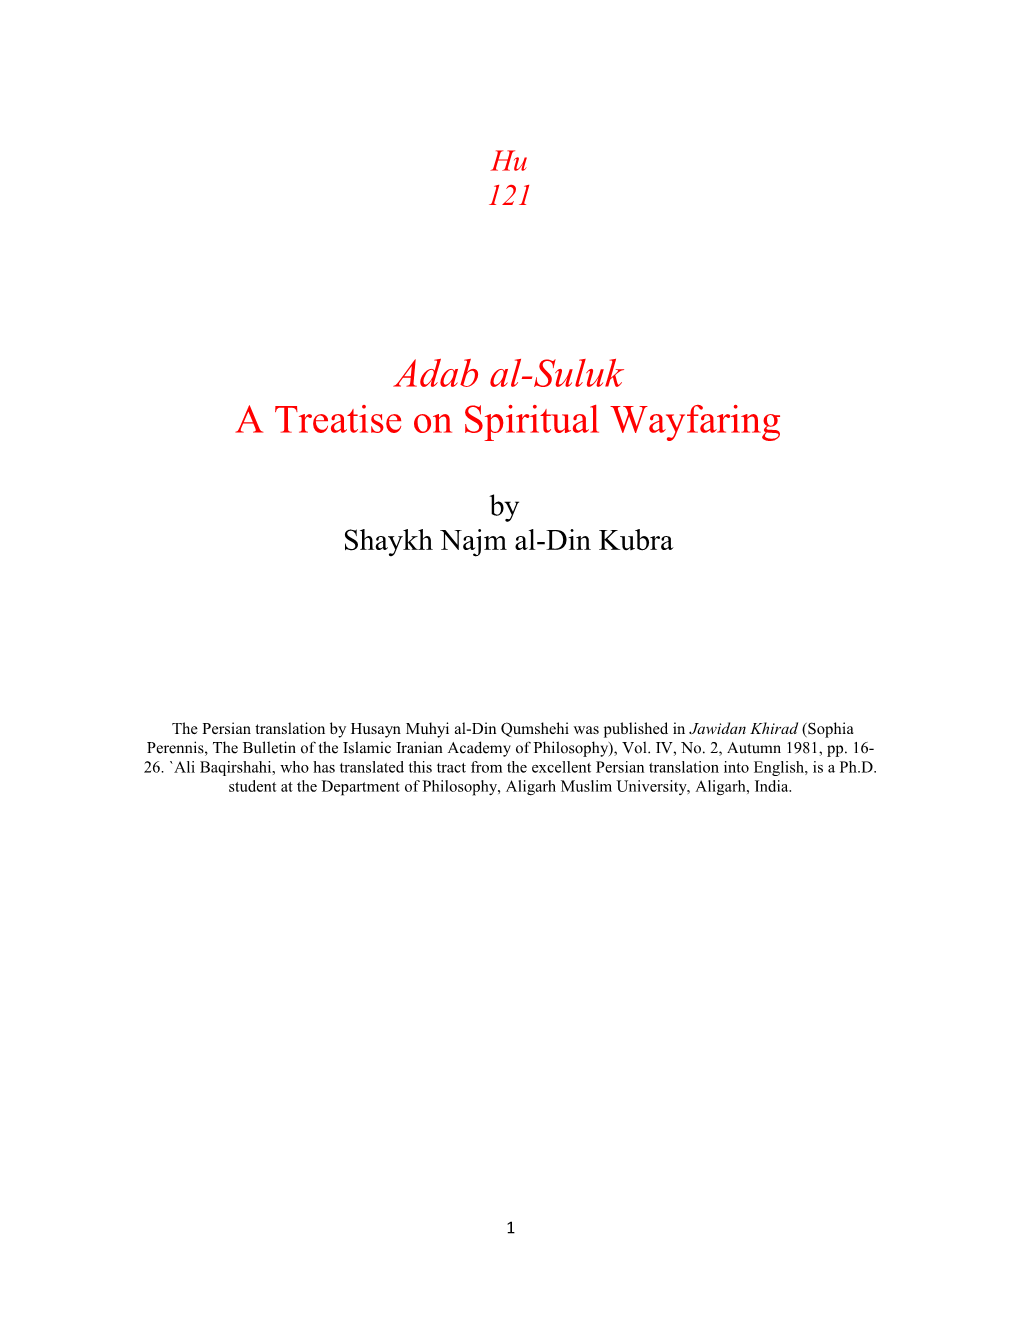 Adab Al-Suluk: a Treatise on Spiritual Wayfaring